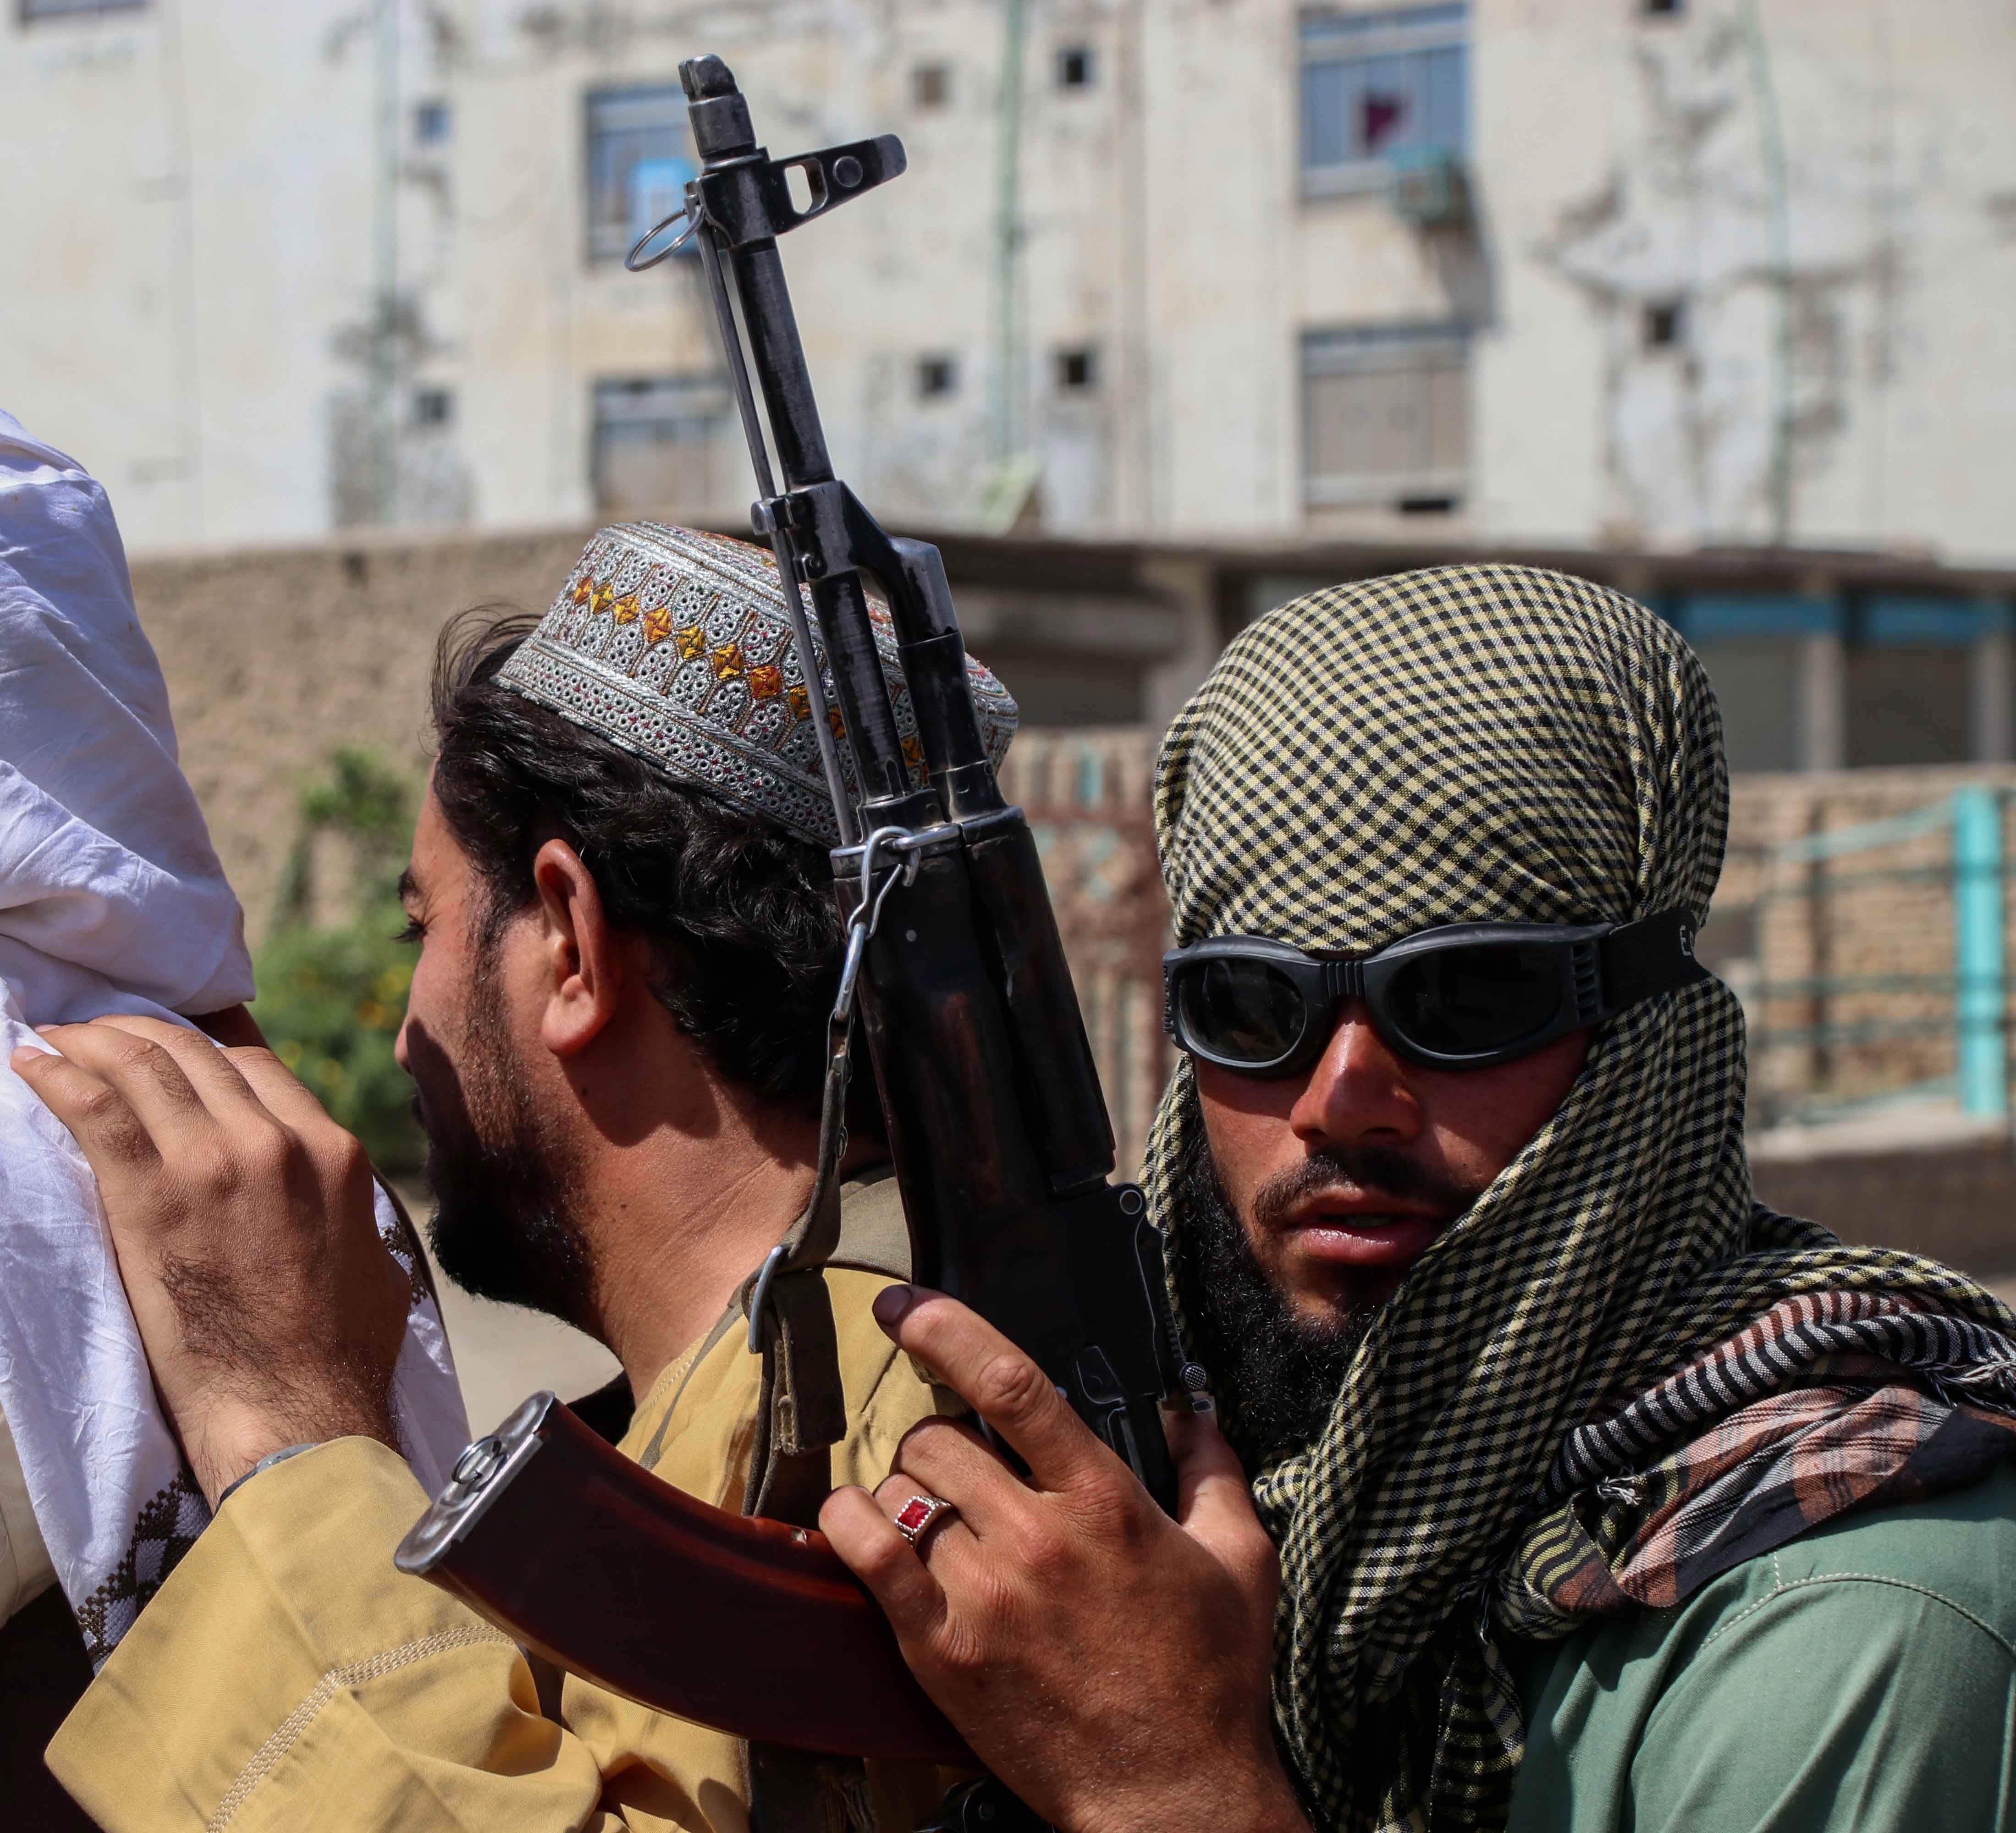 Taliban militants patrolling in Kandahar, Afghansitan, 22 August 2021